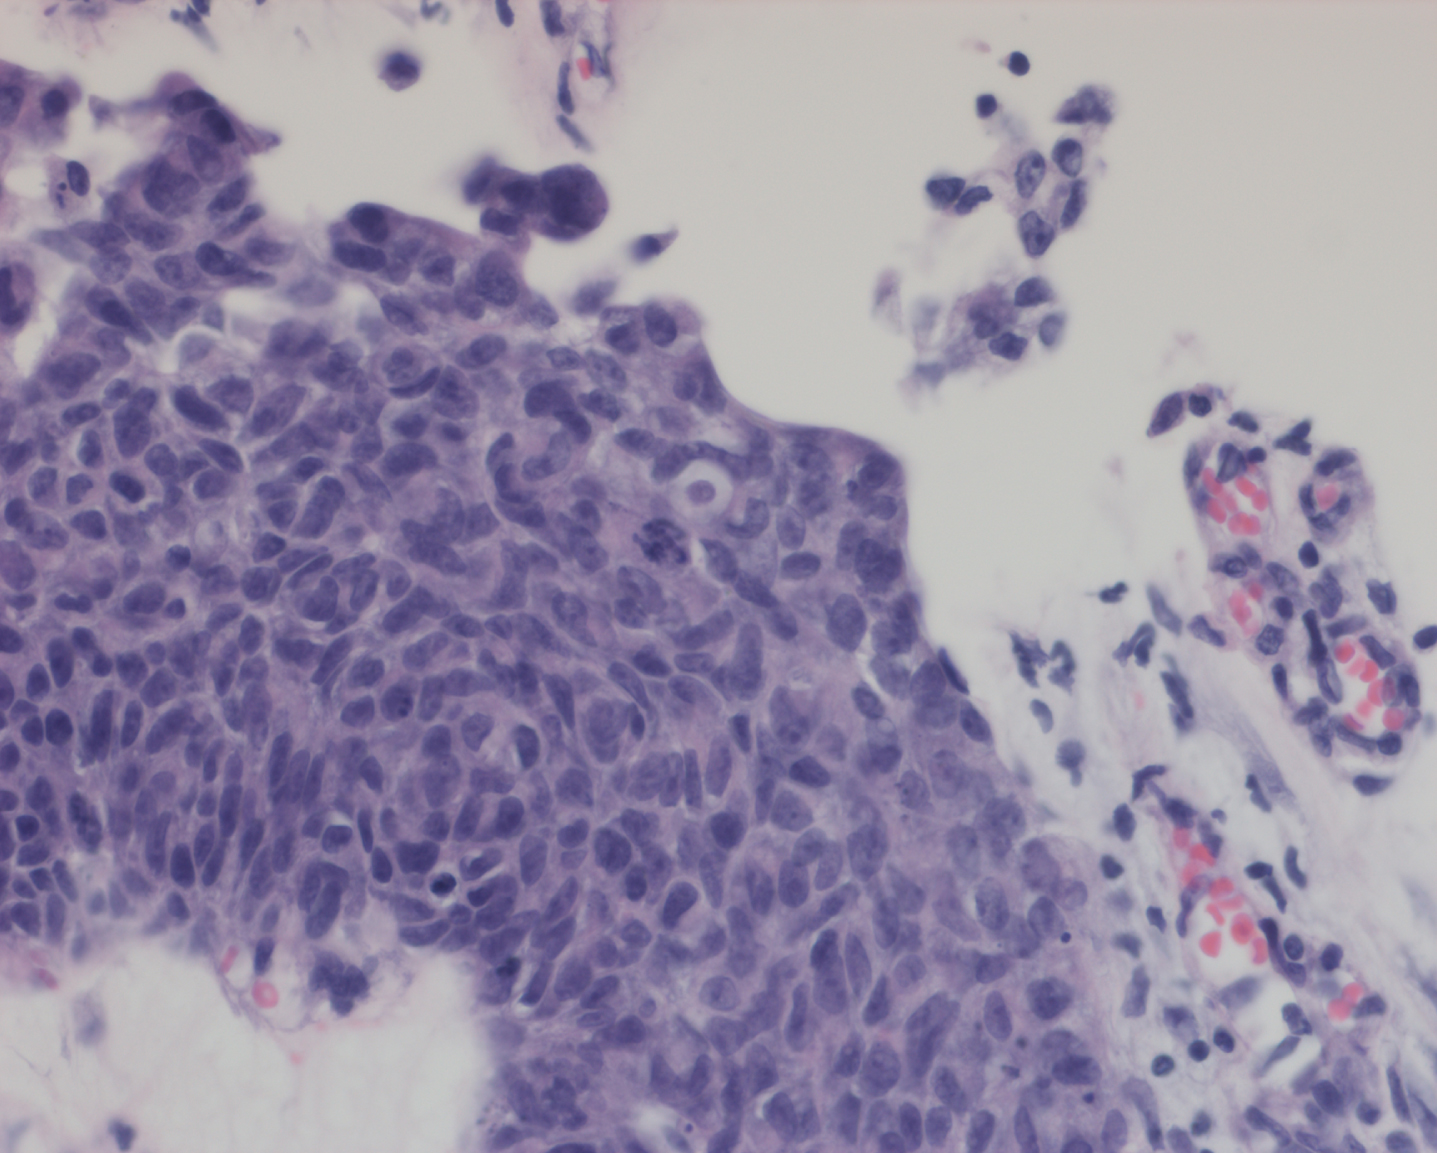 Papillary high grade urothelial carcinoma.